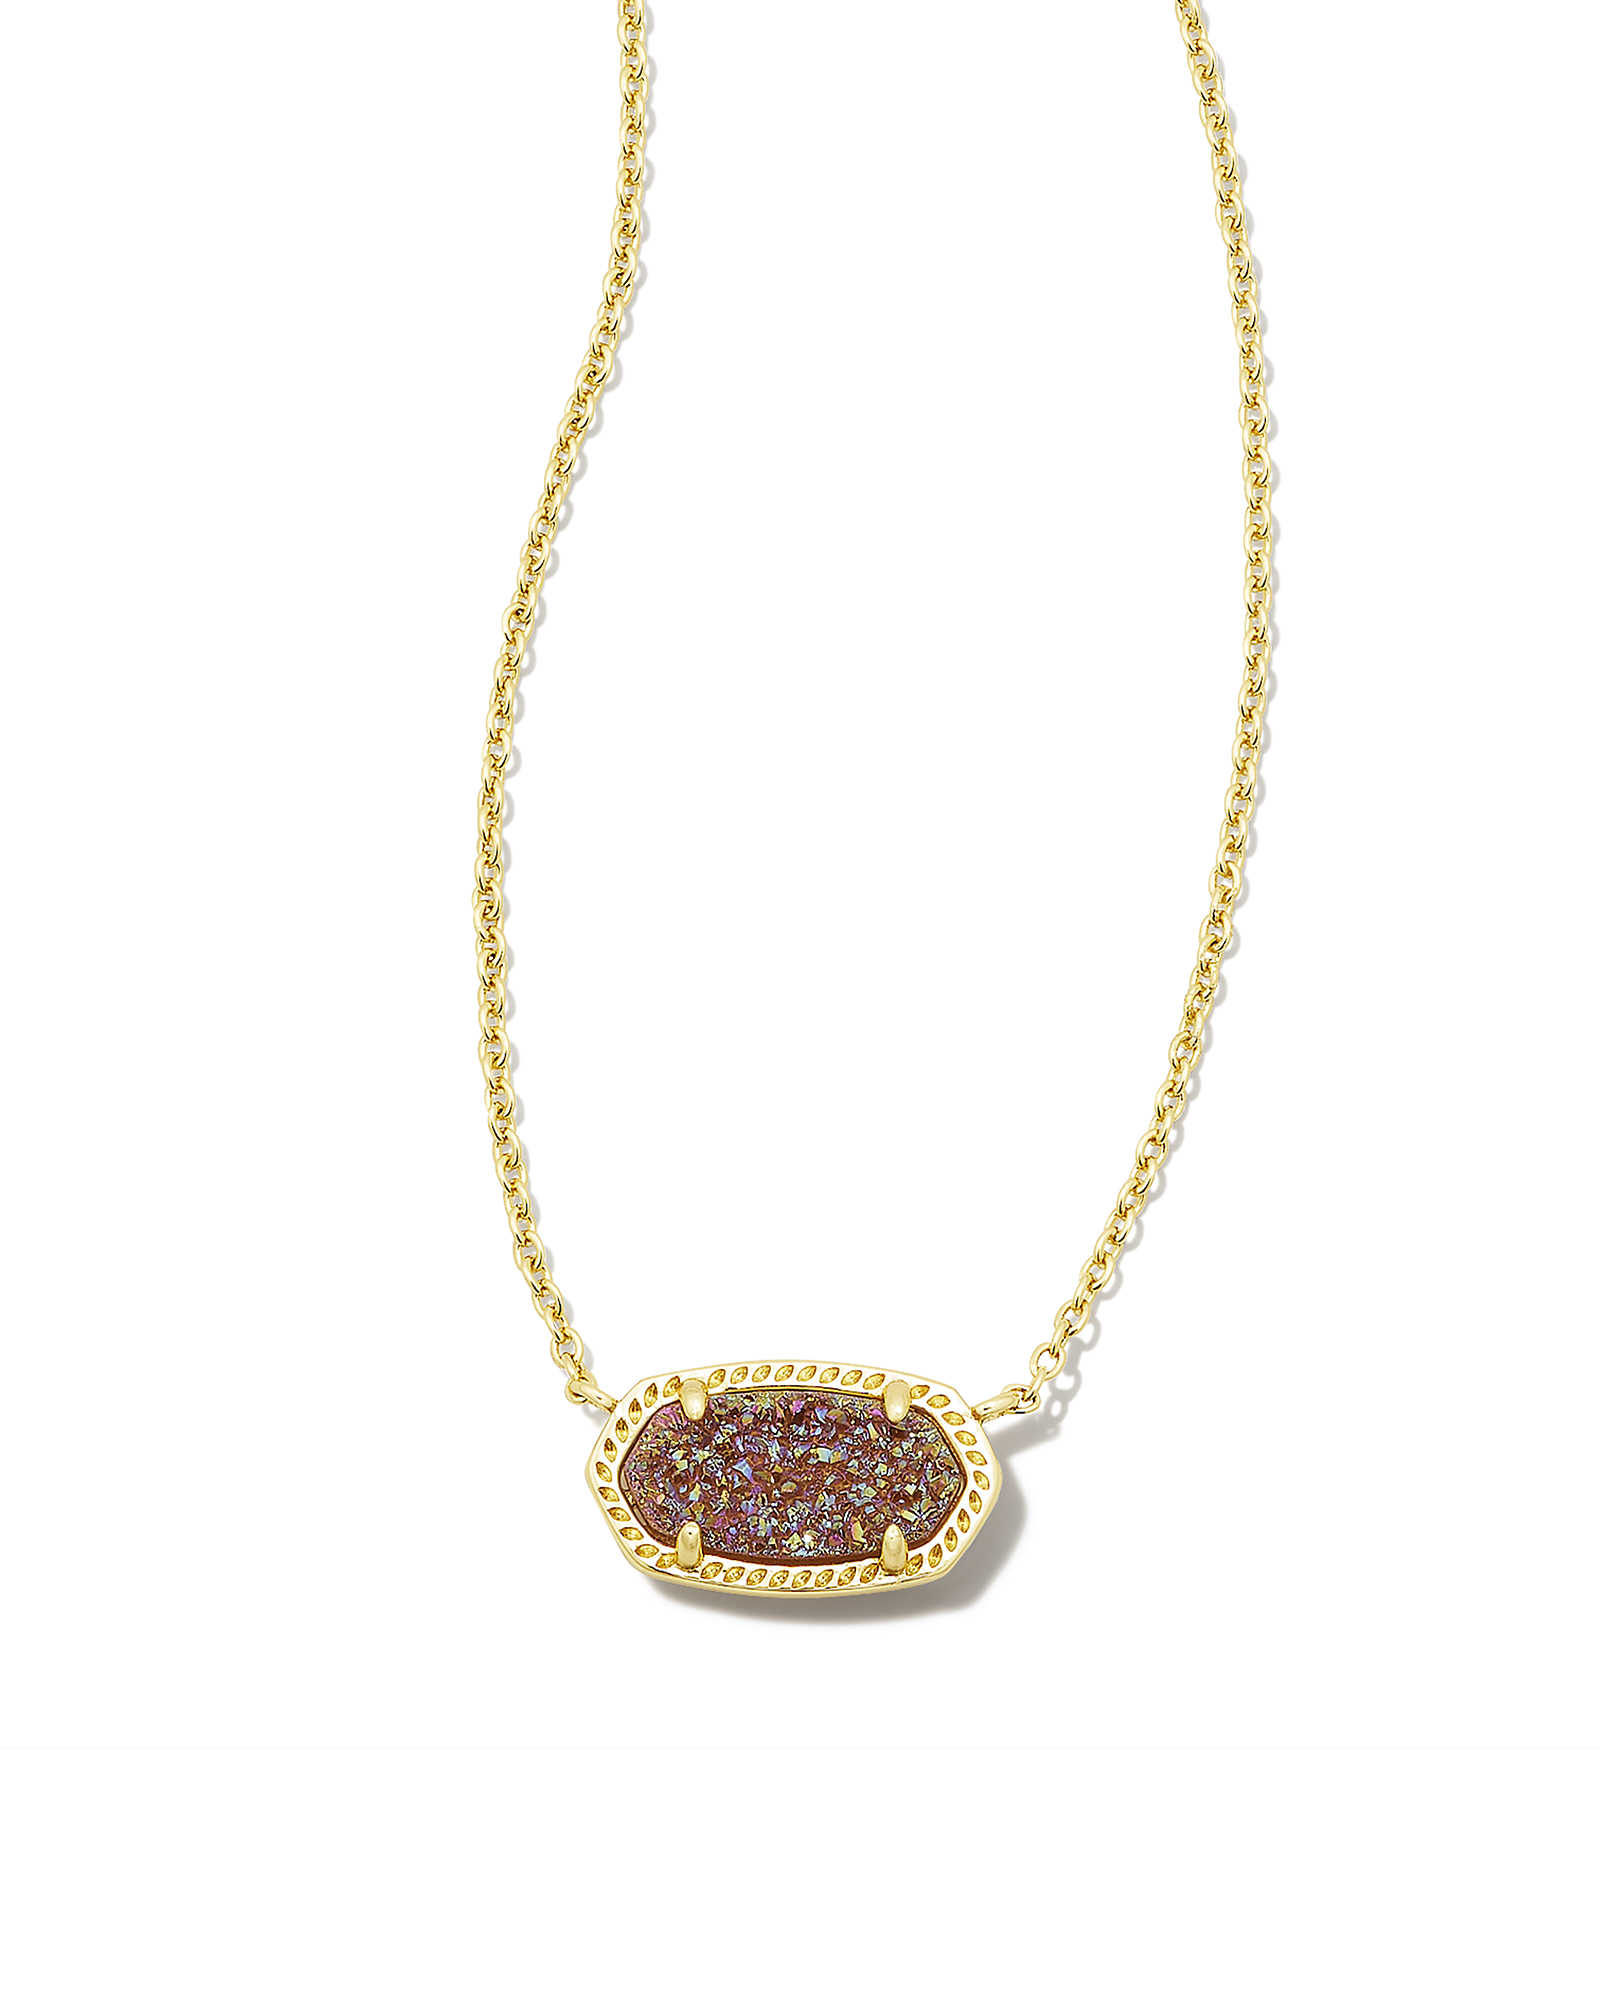 Elisa Gold Pendant Necklace in Spice Drusy | Kendra Scott